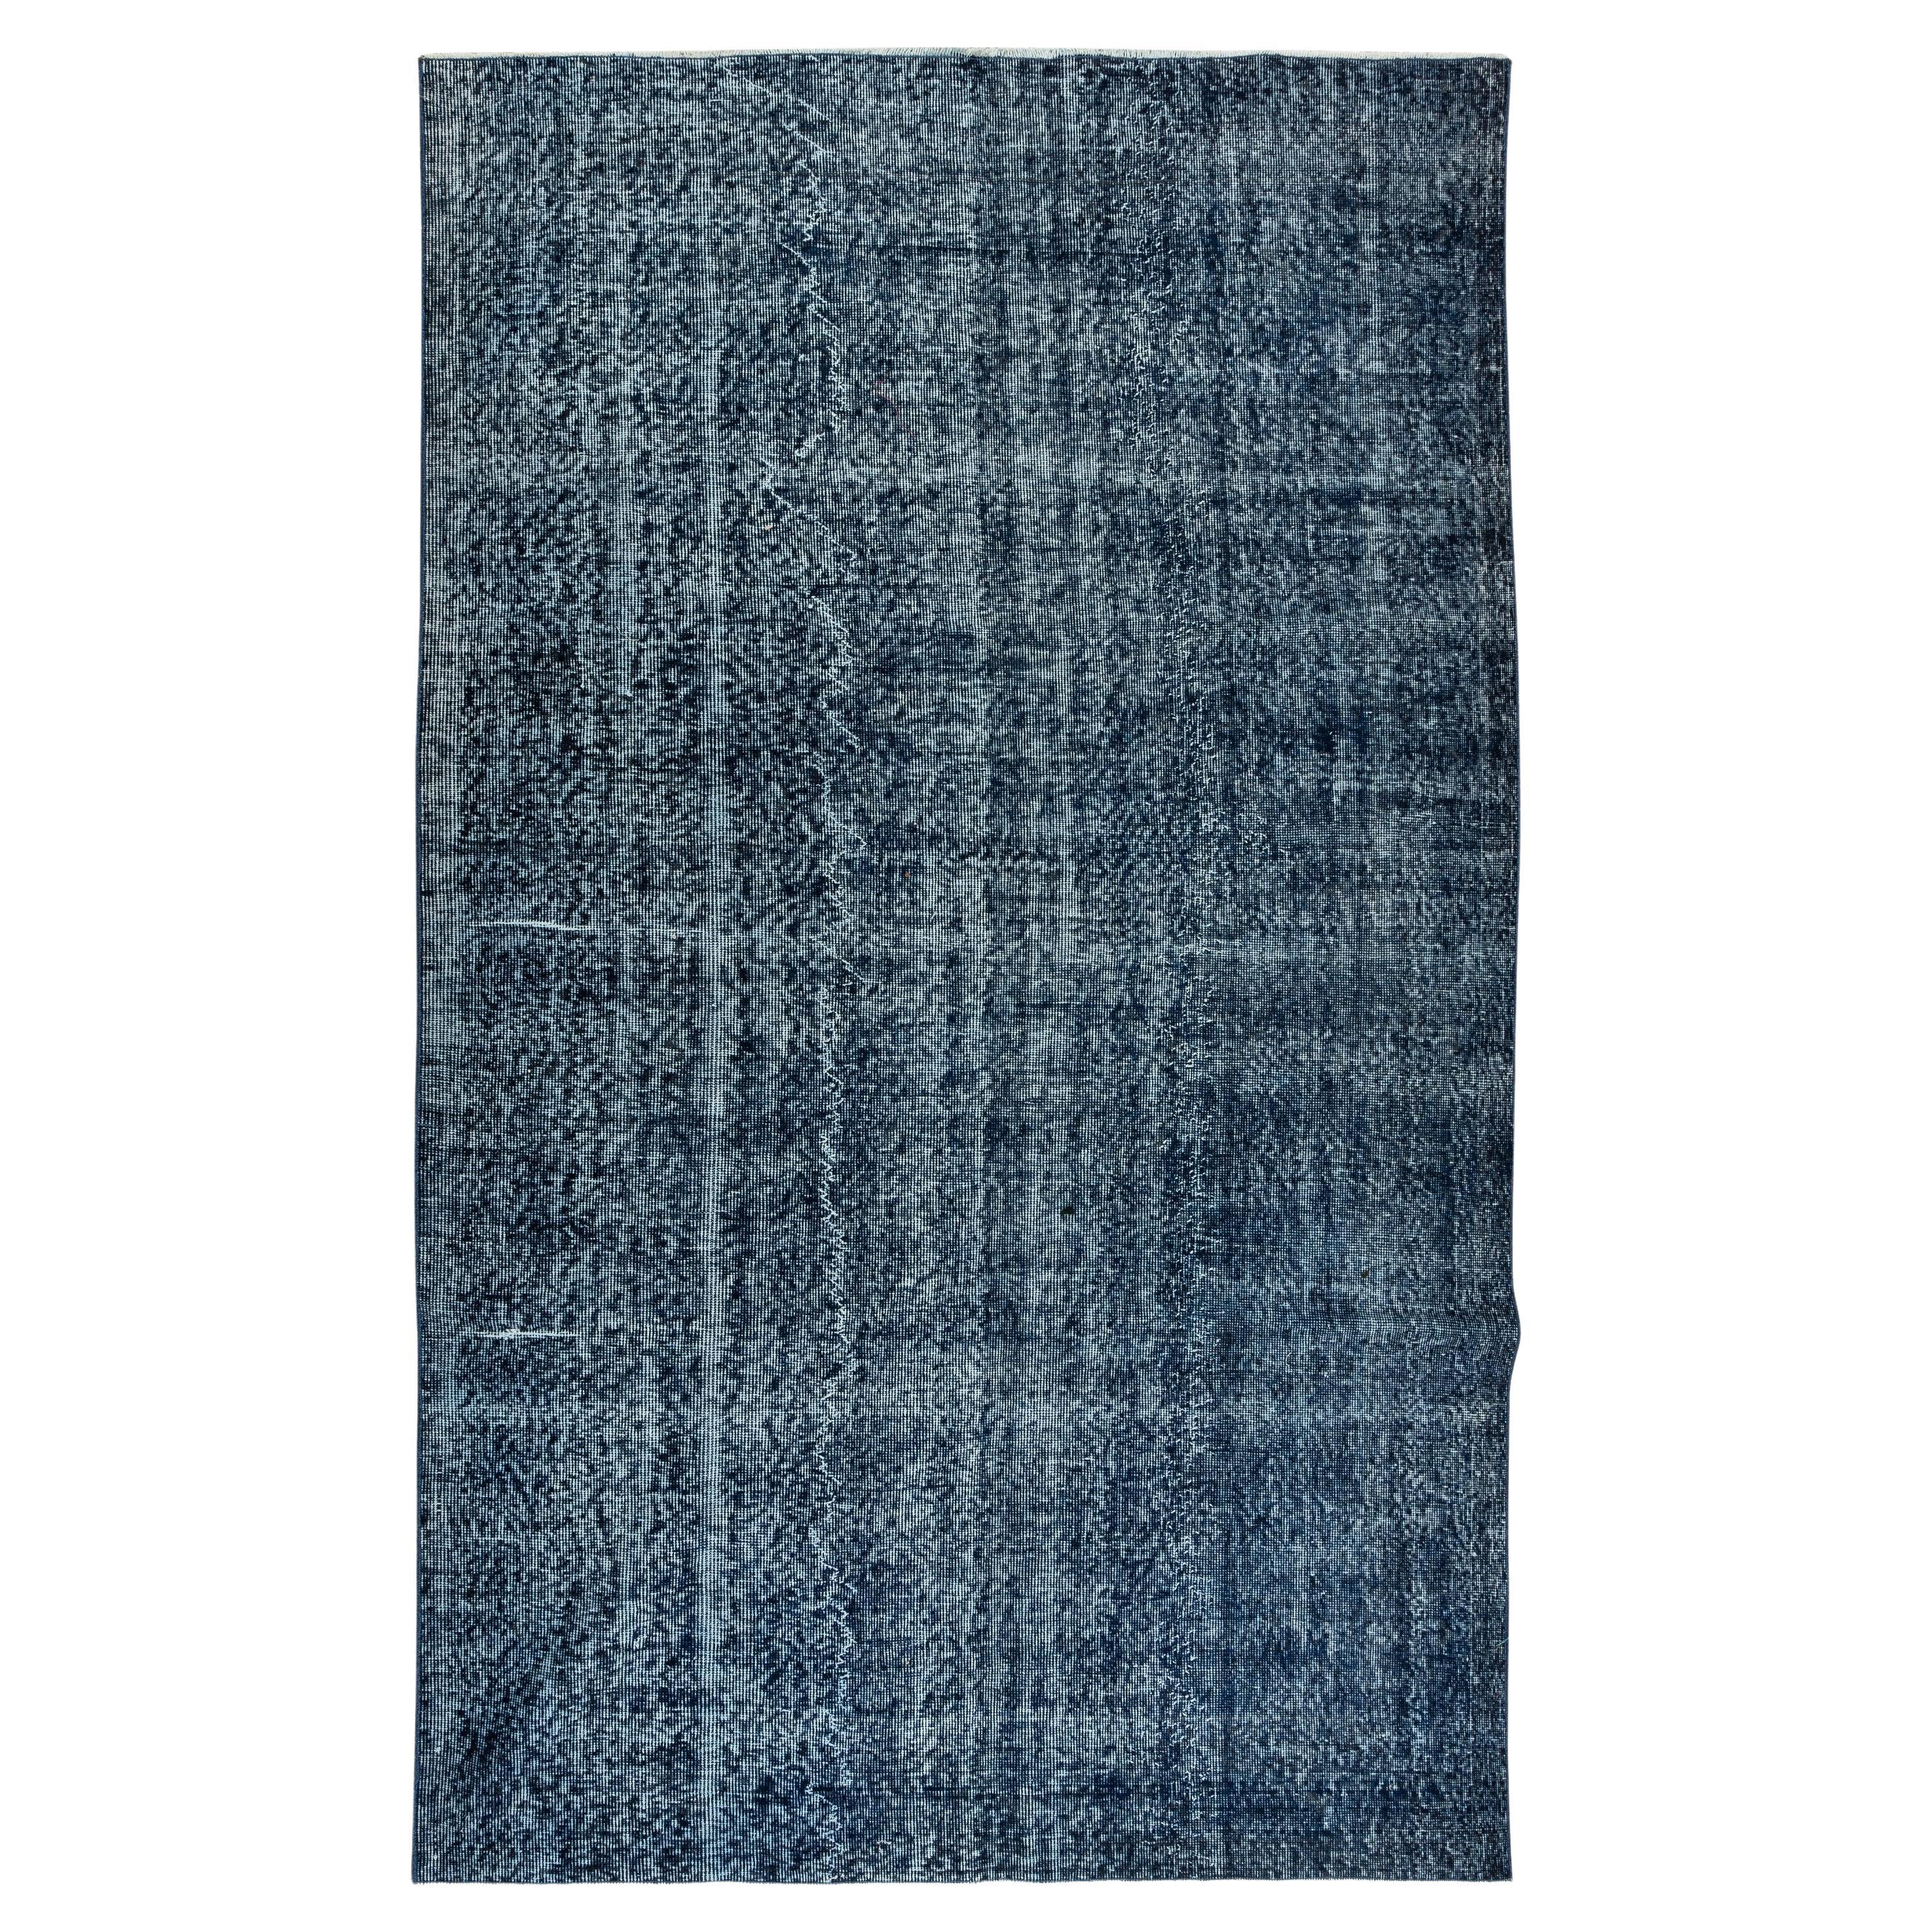 5.6x9.2 Ft Modern Navy Blue Area Rug, Vintage Handmade Turkish Wool Carpet For Sale